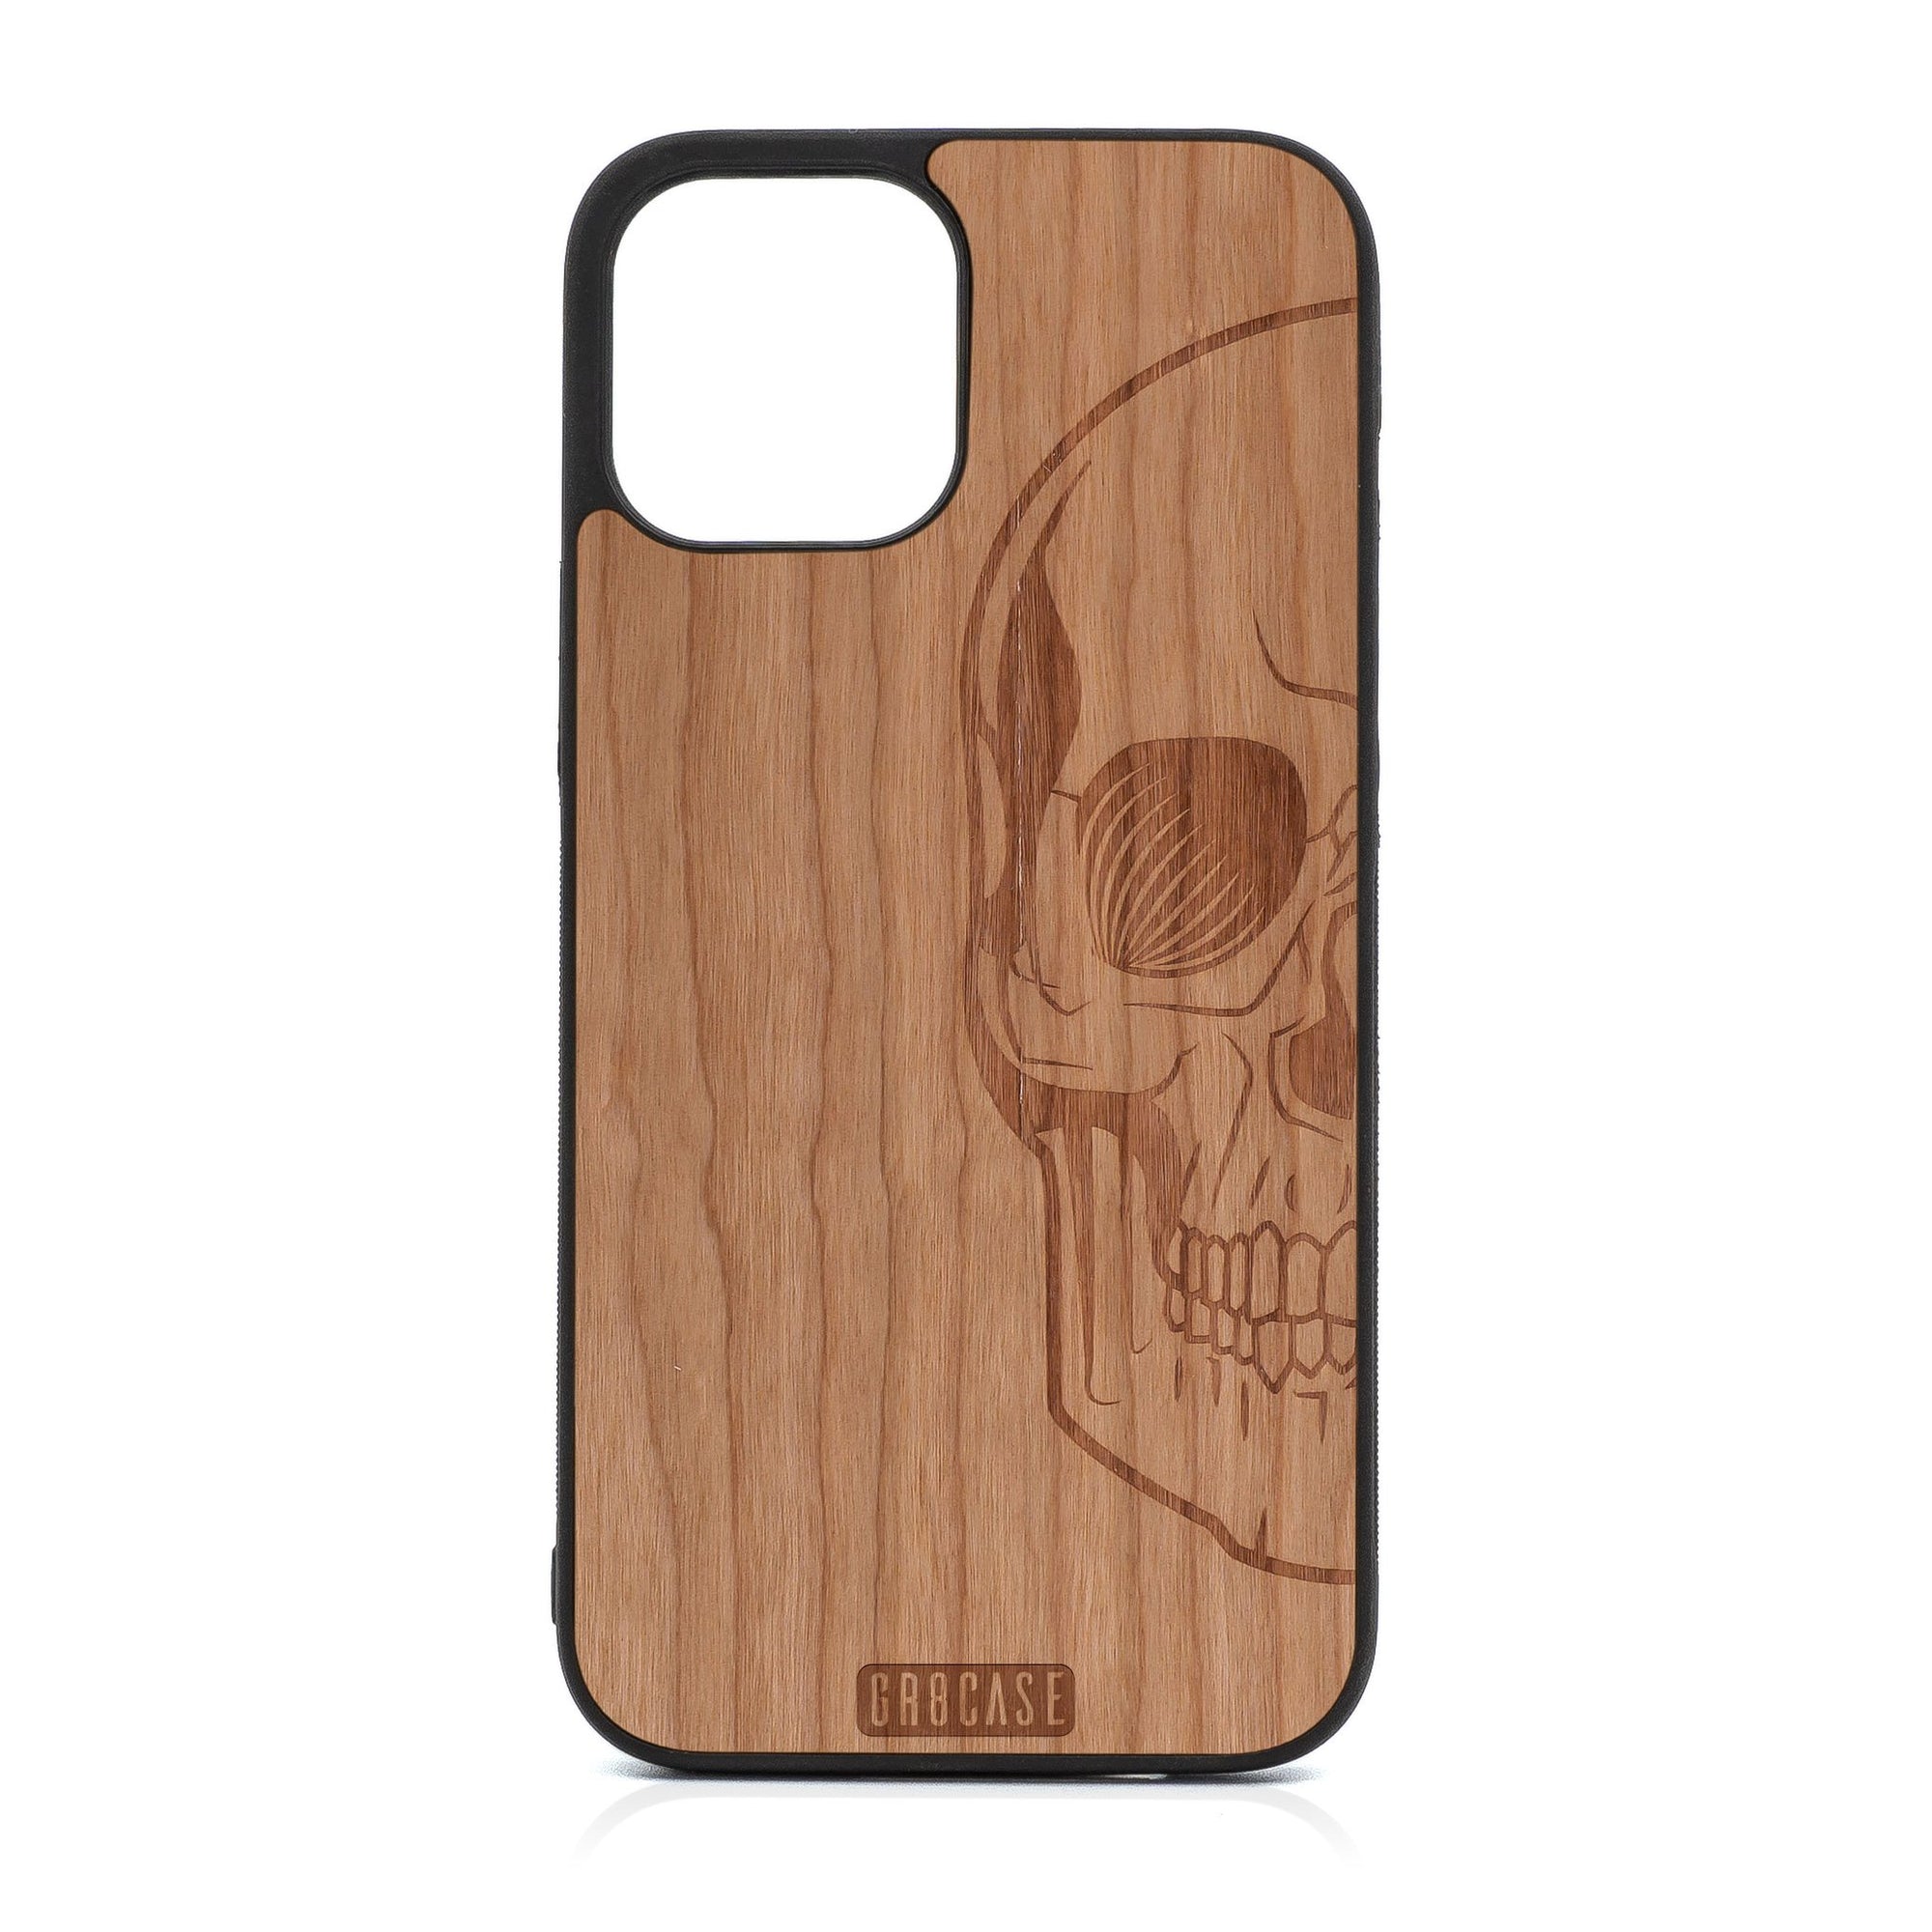 Half Skull Design Wood Case For iPhone 12 Pro Max